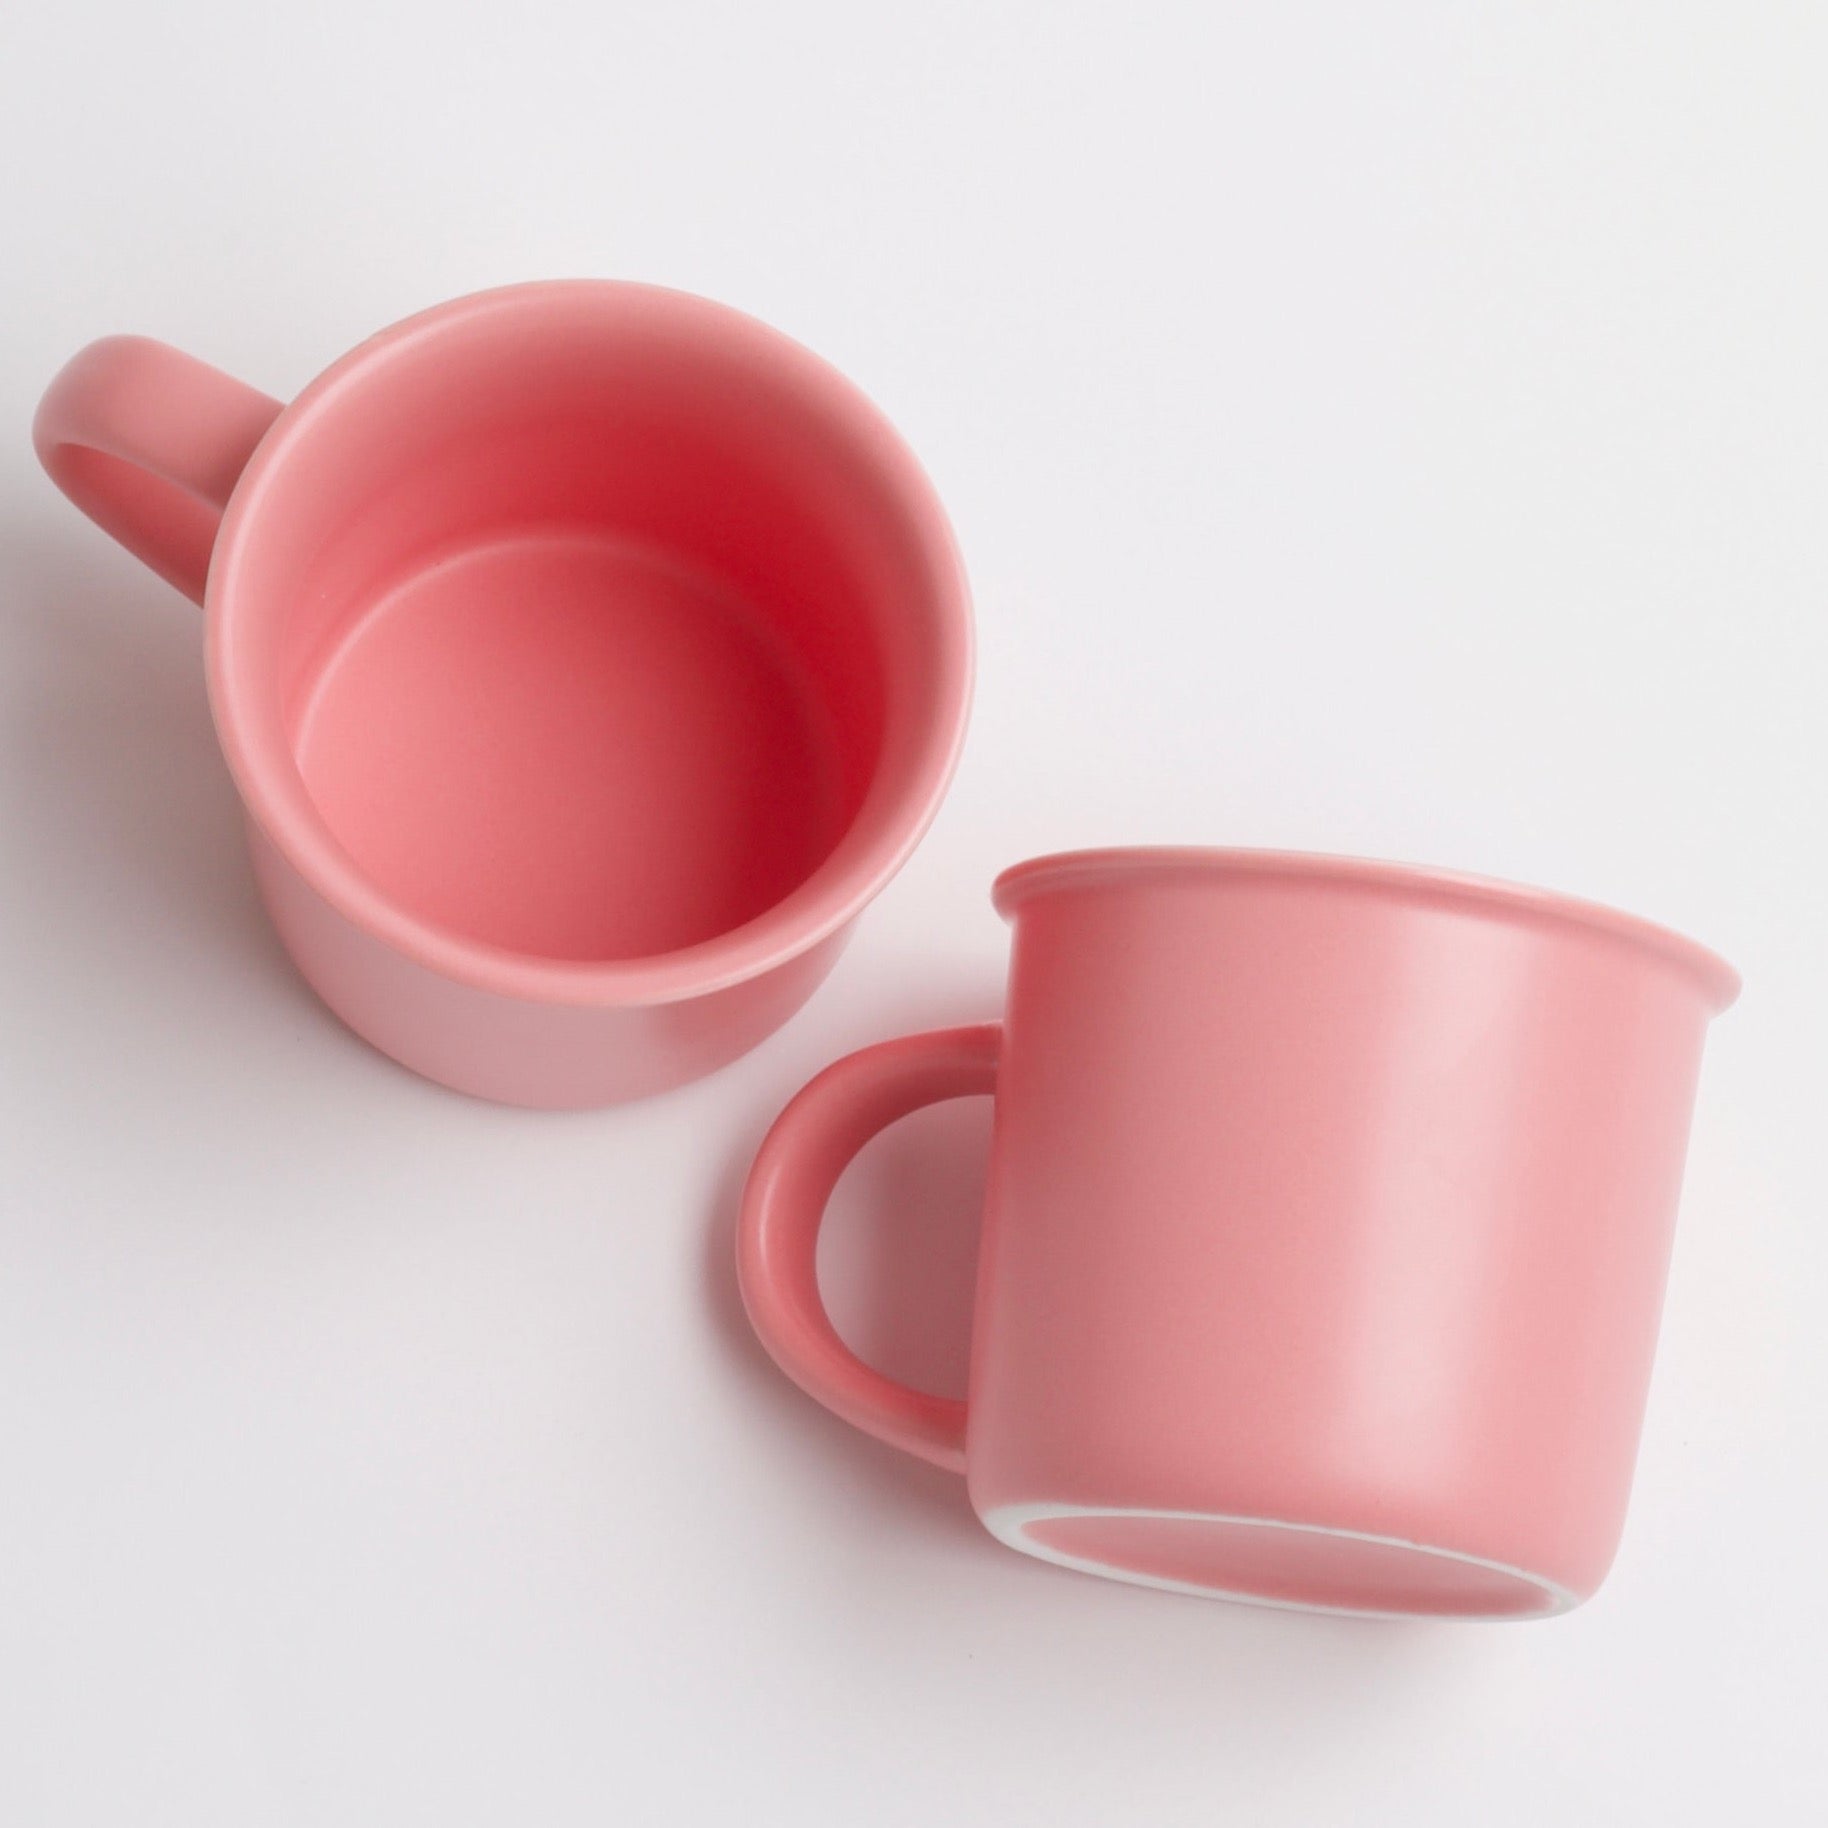 Two empty pink ceramic mugs